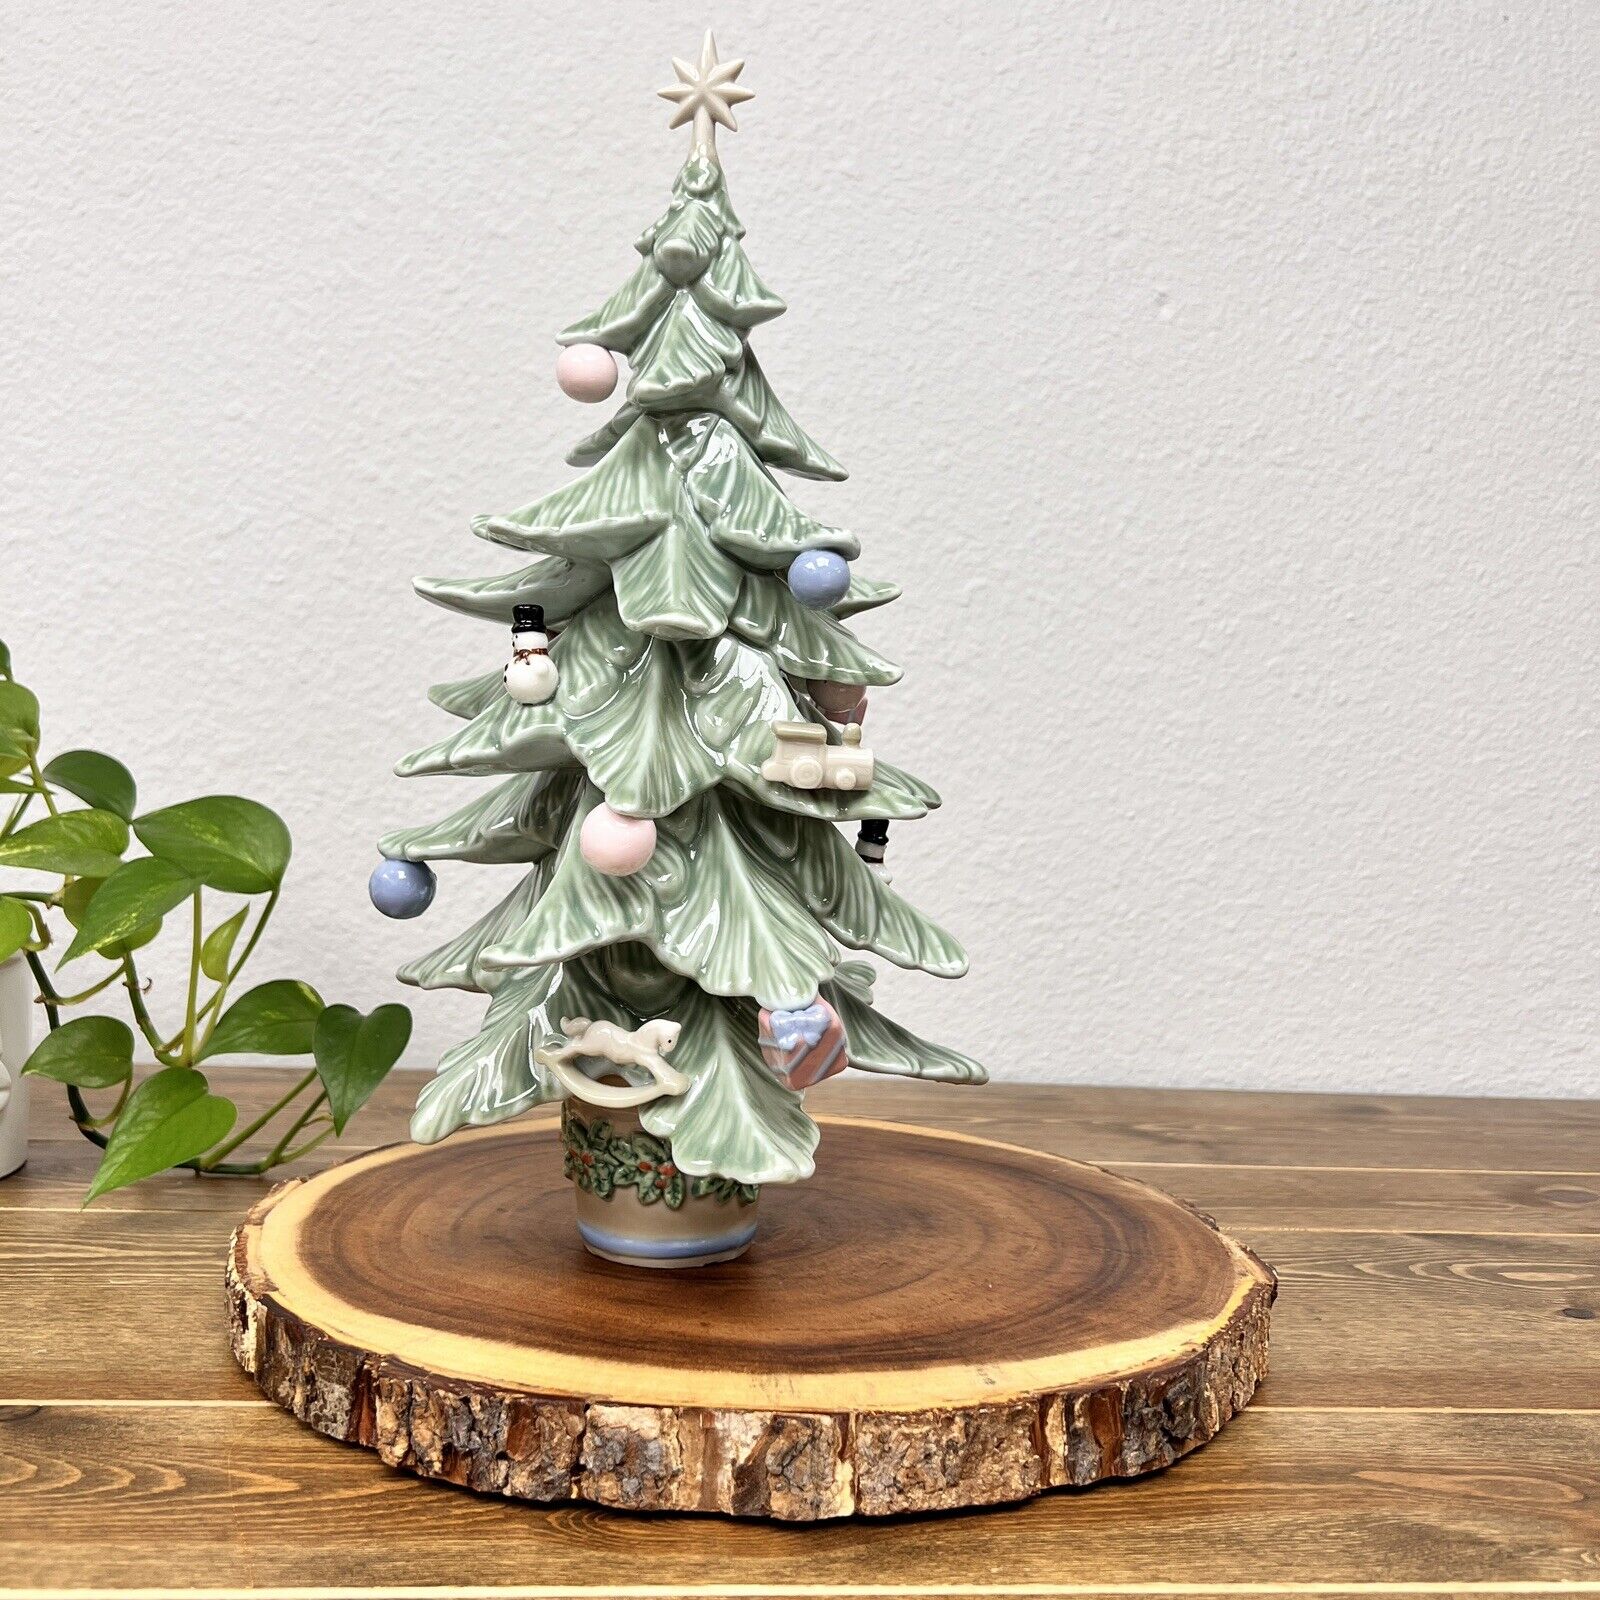 O'Well Christmas Morning Grandeur  Noel Christmas Tree W/ Star Ornaments 14.5”